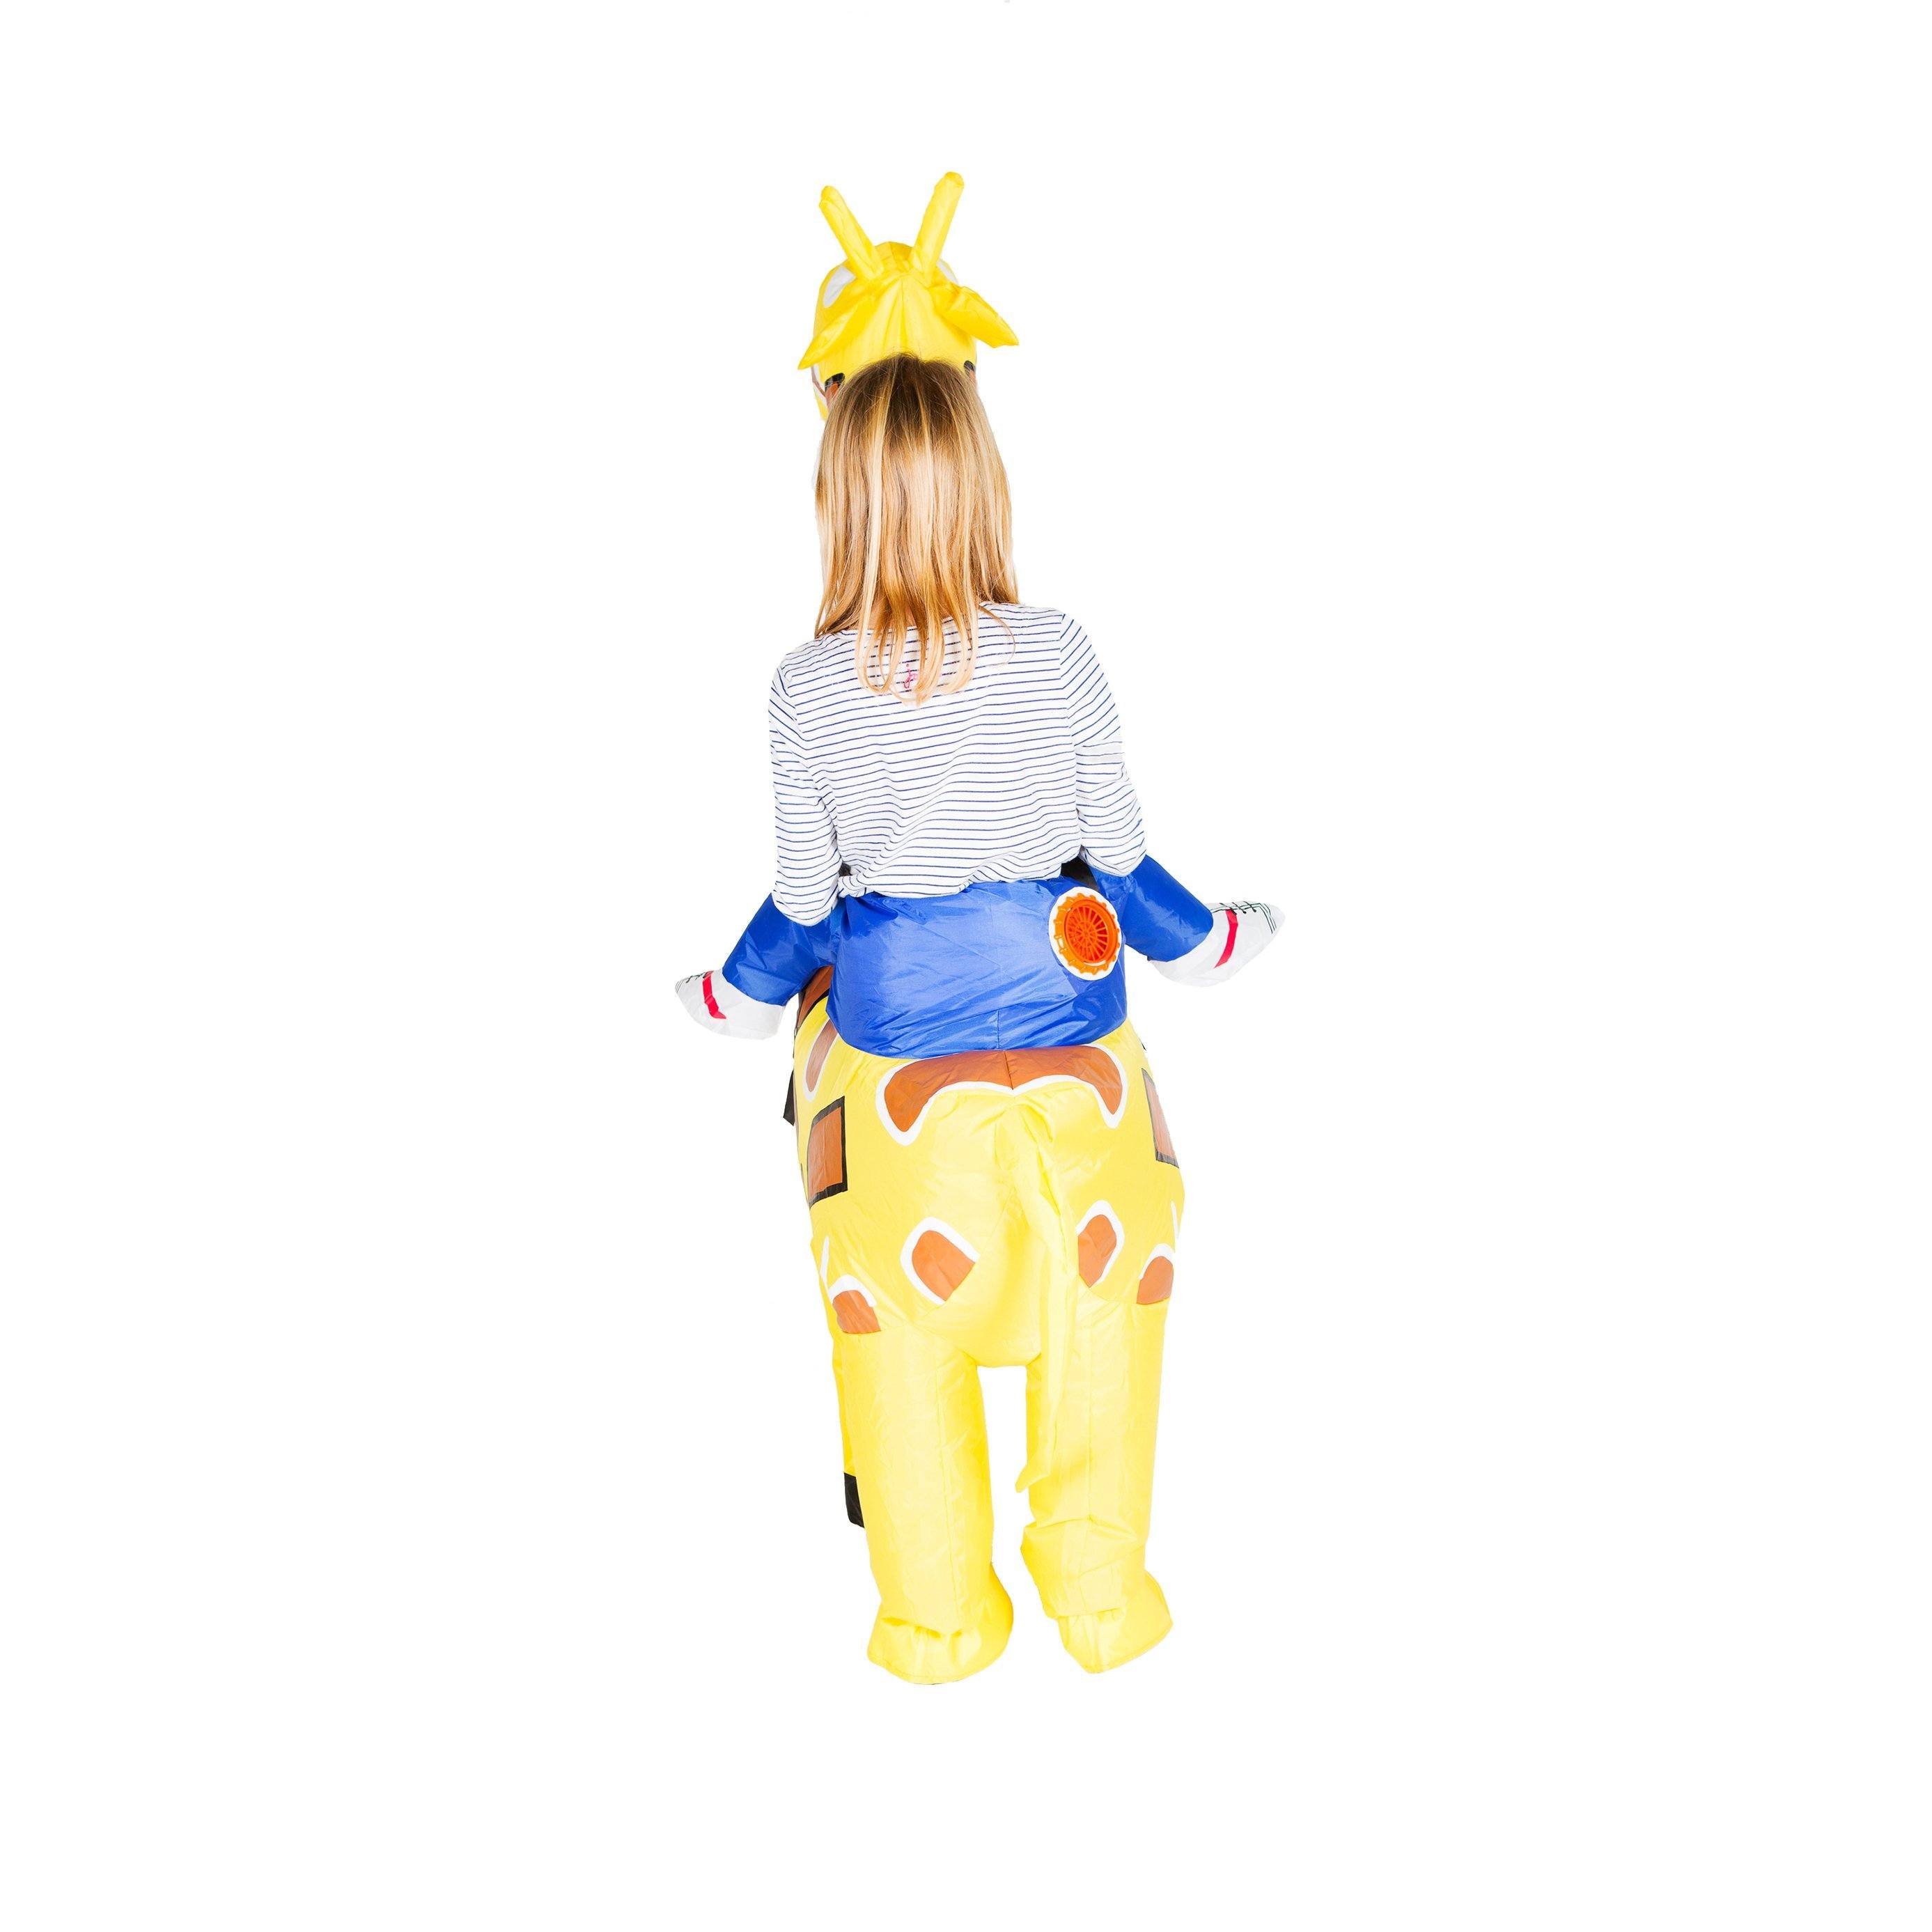 Fancy Dress - Kids Inflatable Giraffe Costume